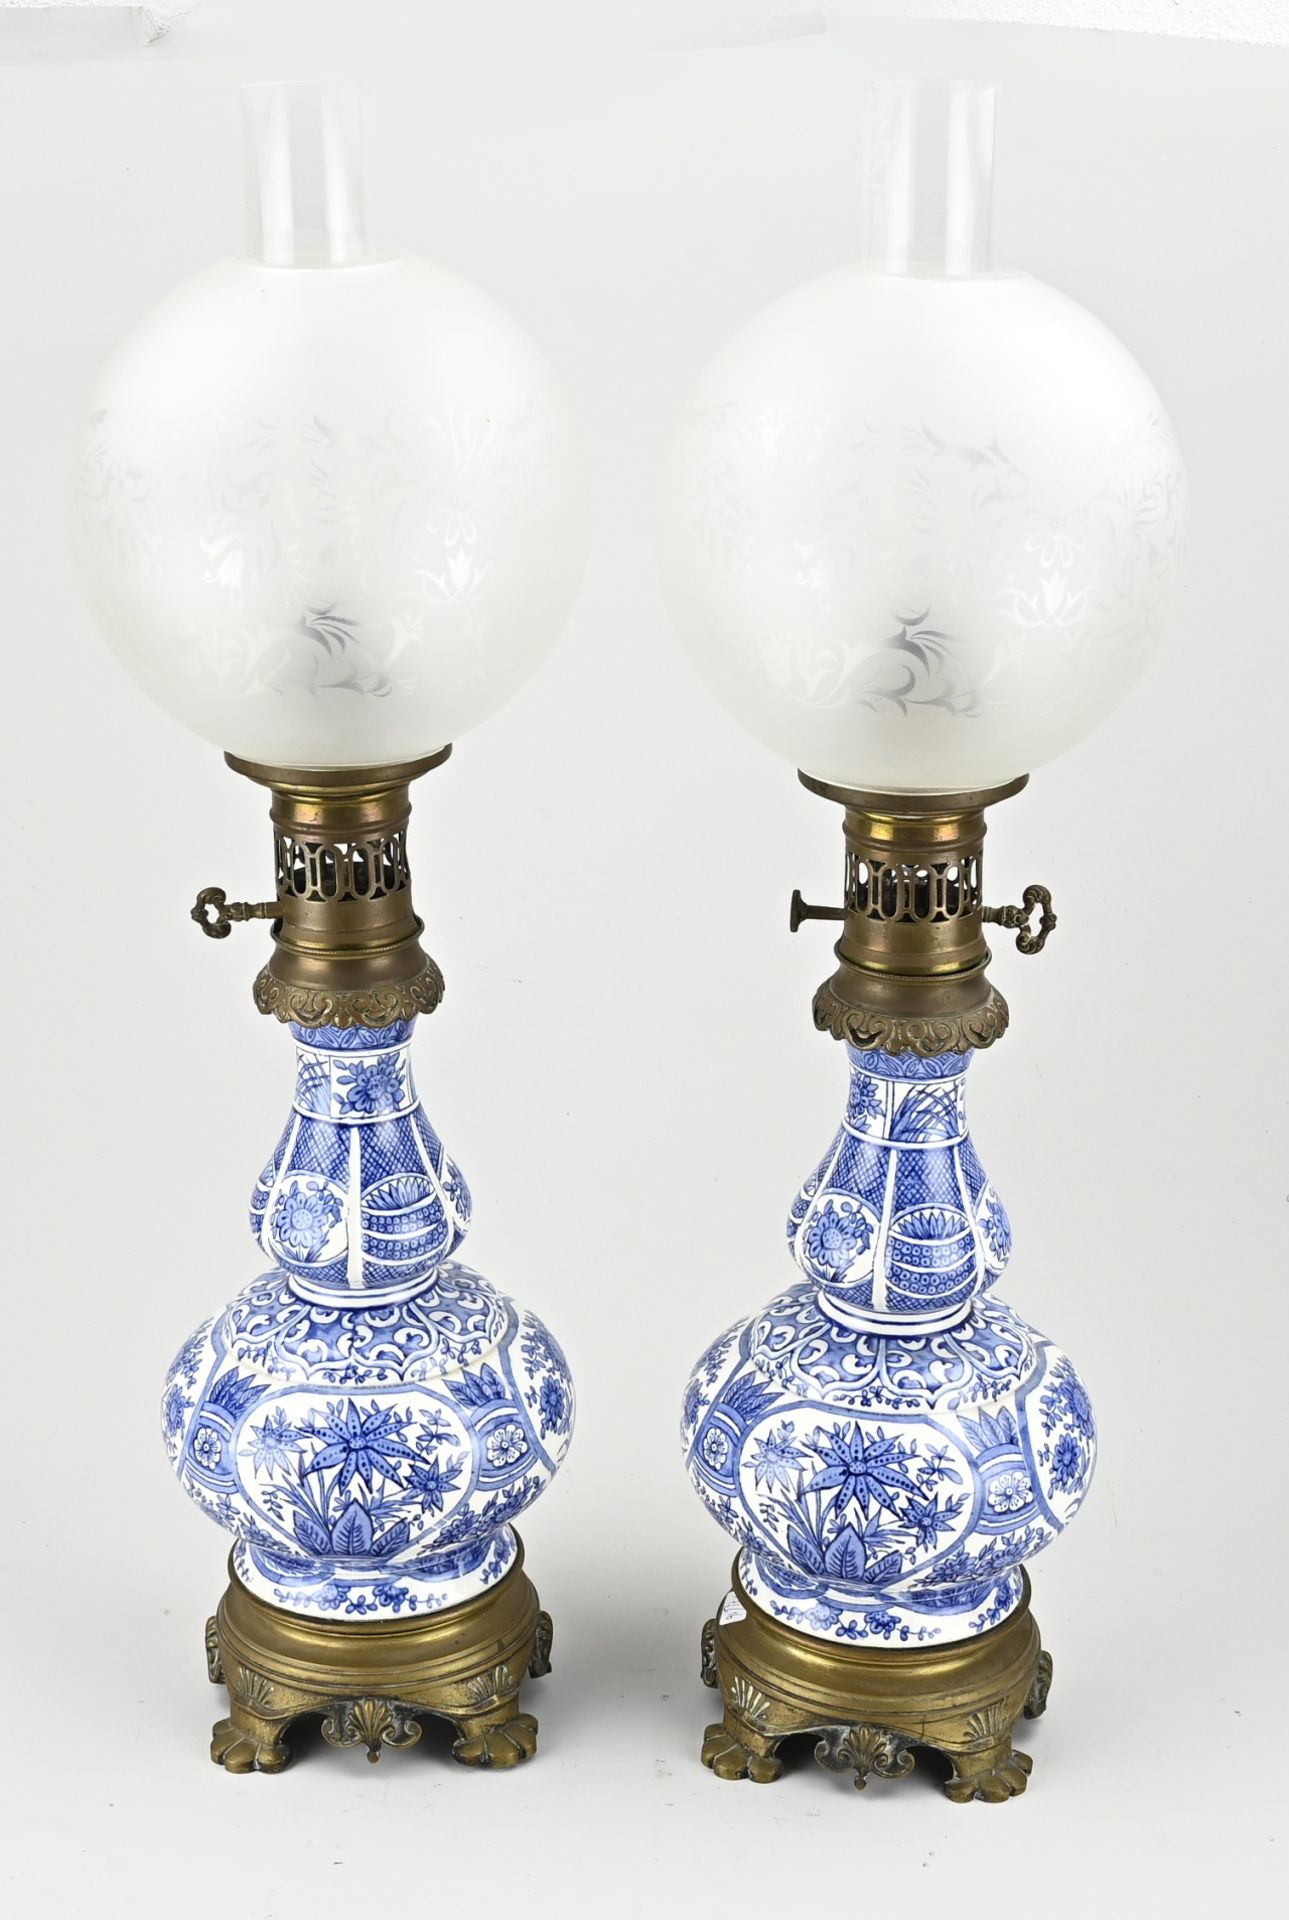 Two antique kerosene lamps, H 60 cm.